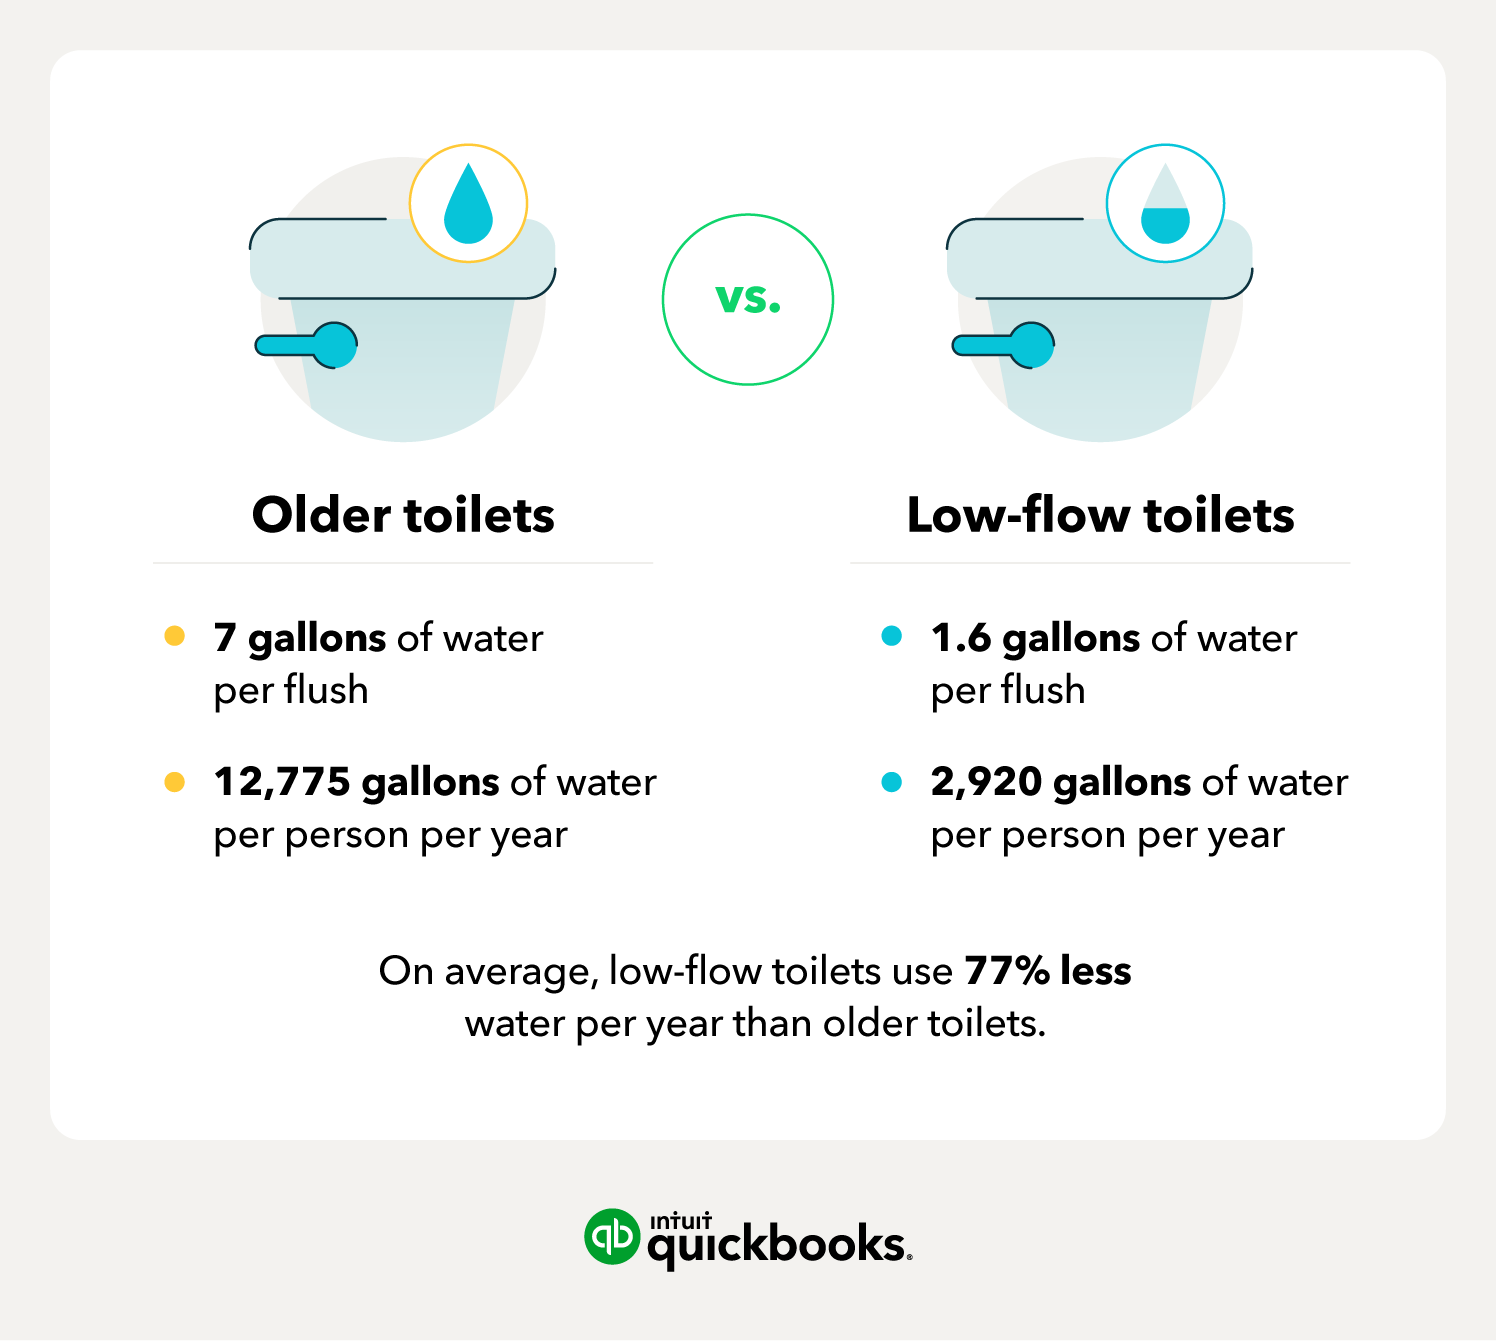 Low flow toilets